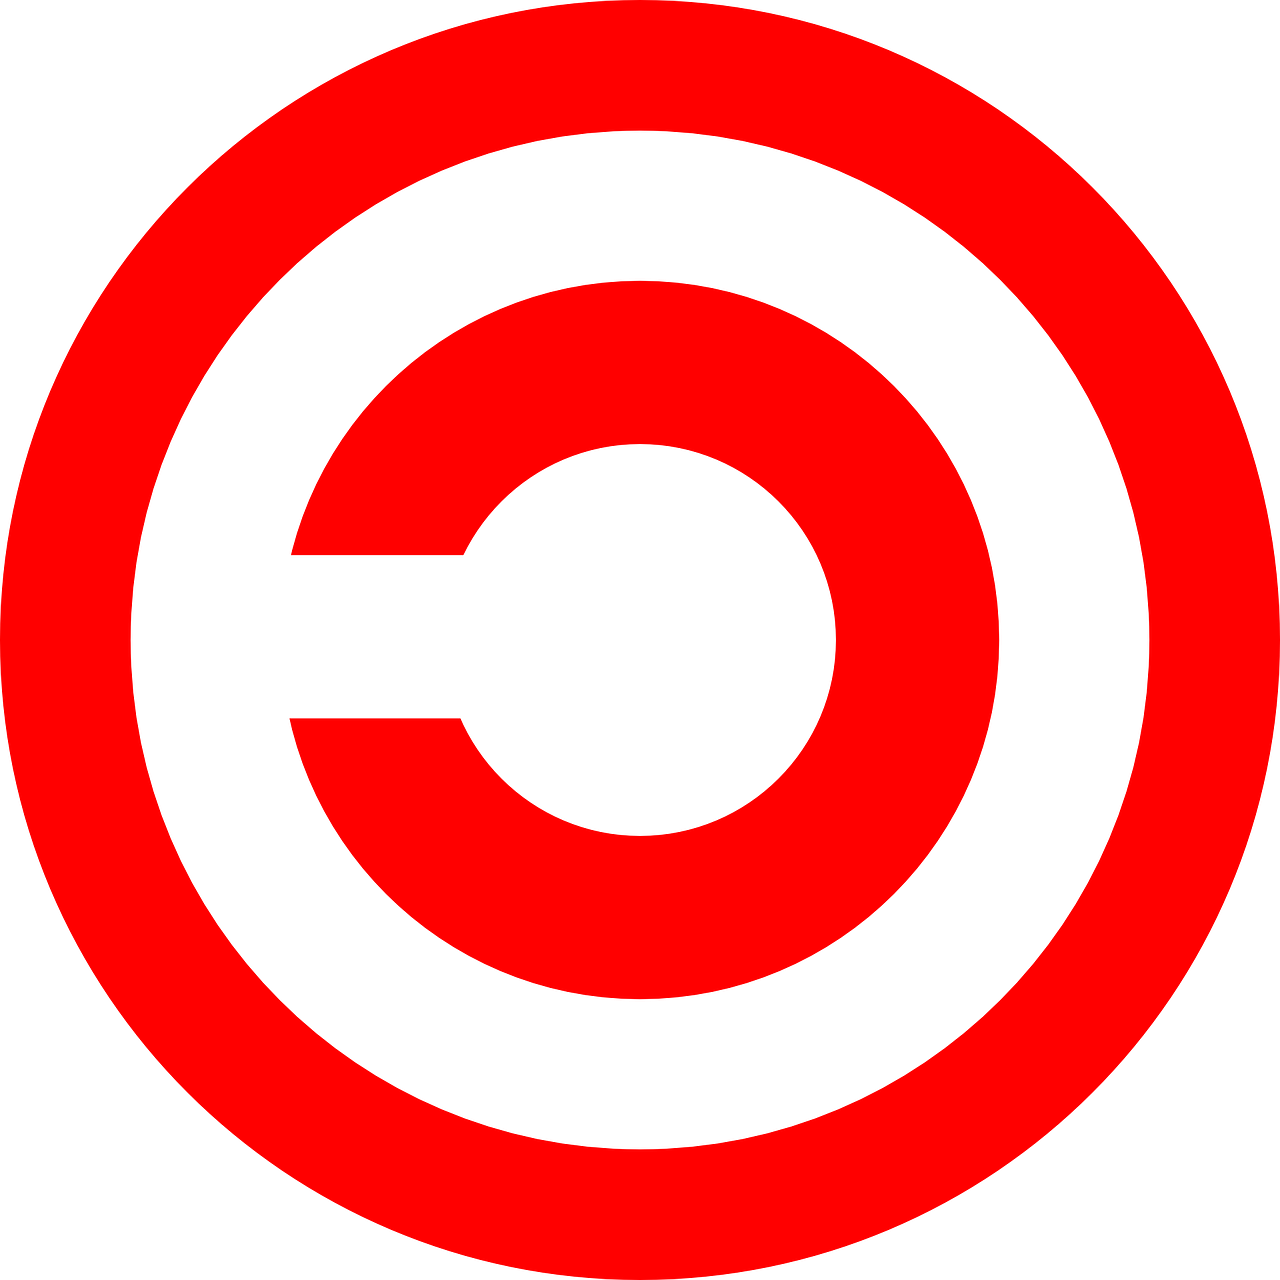 copyleft symbol sign free photo